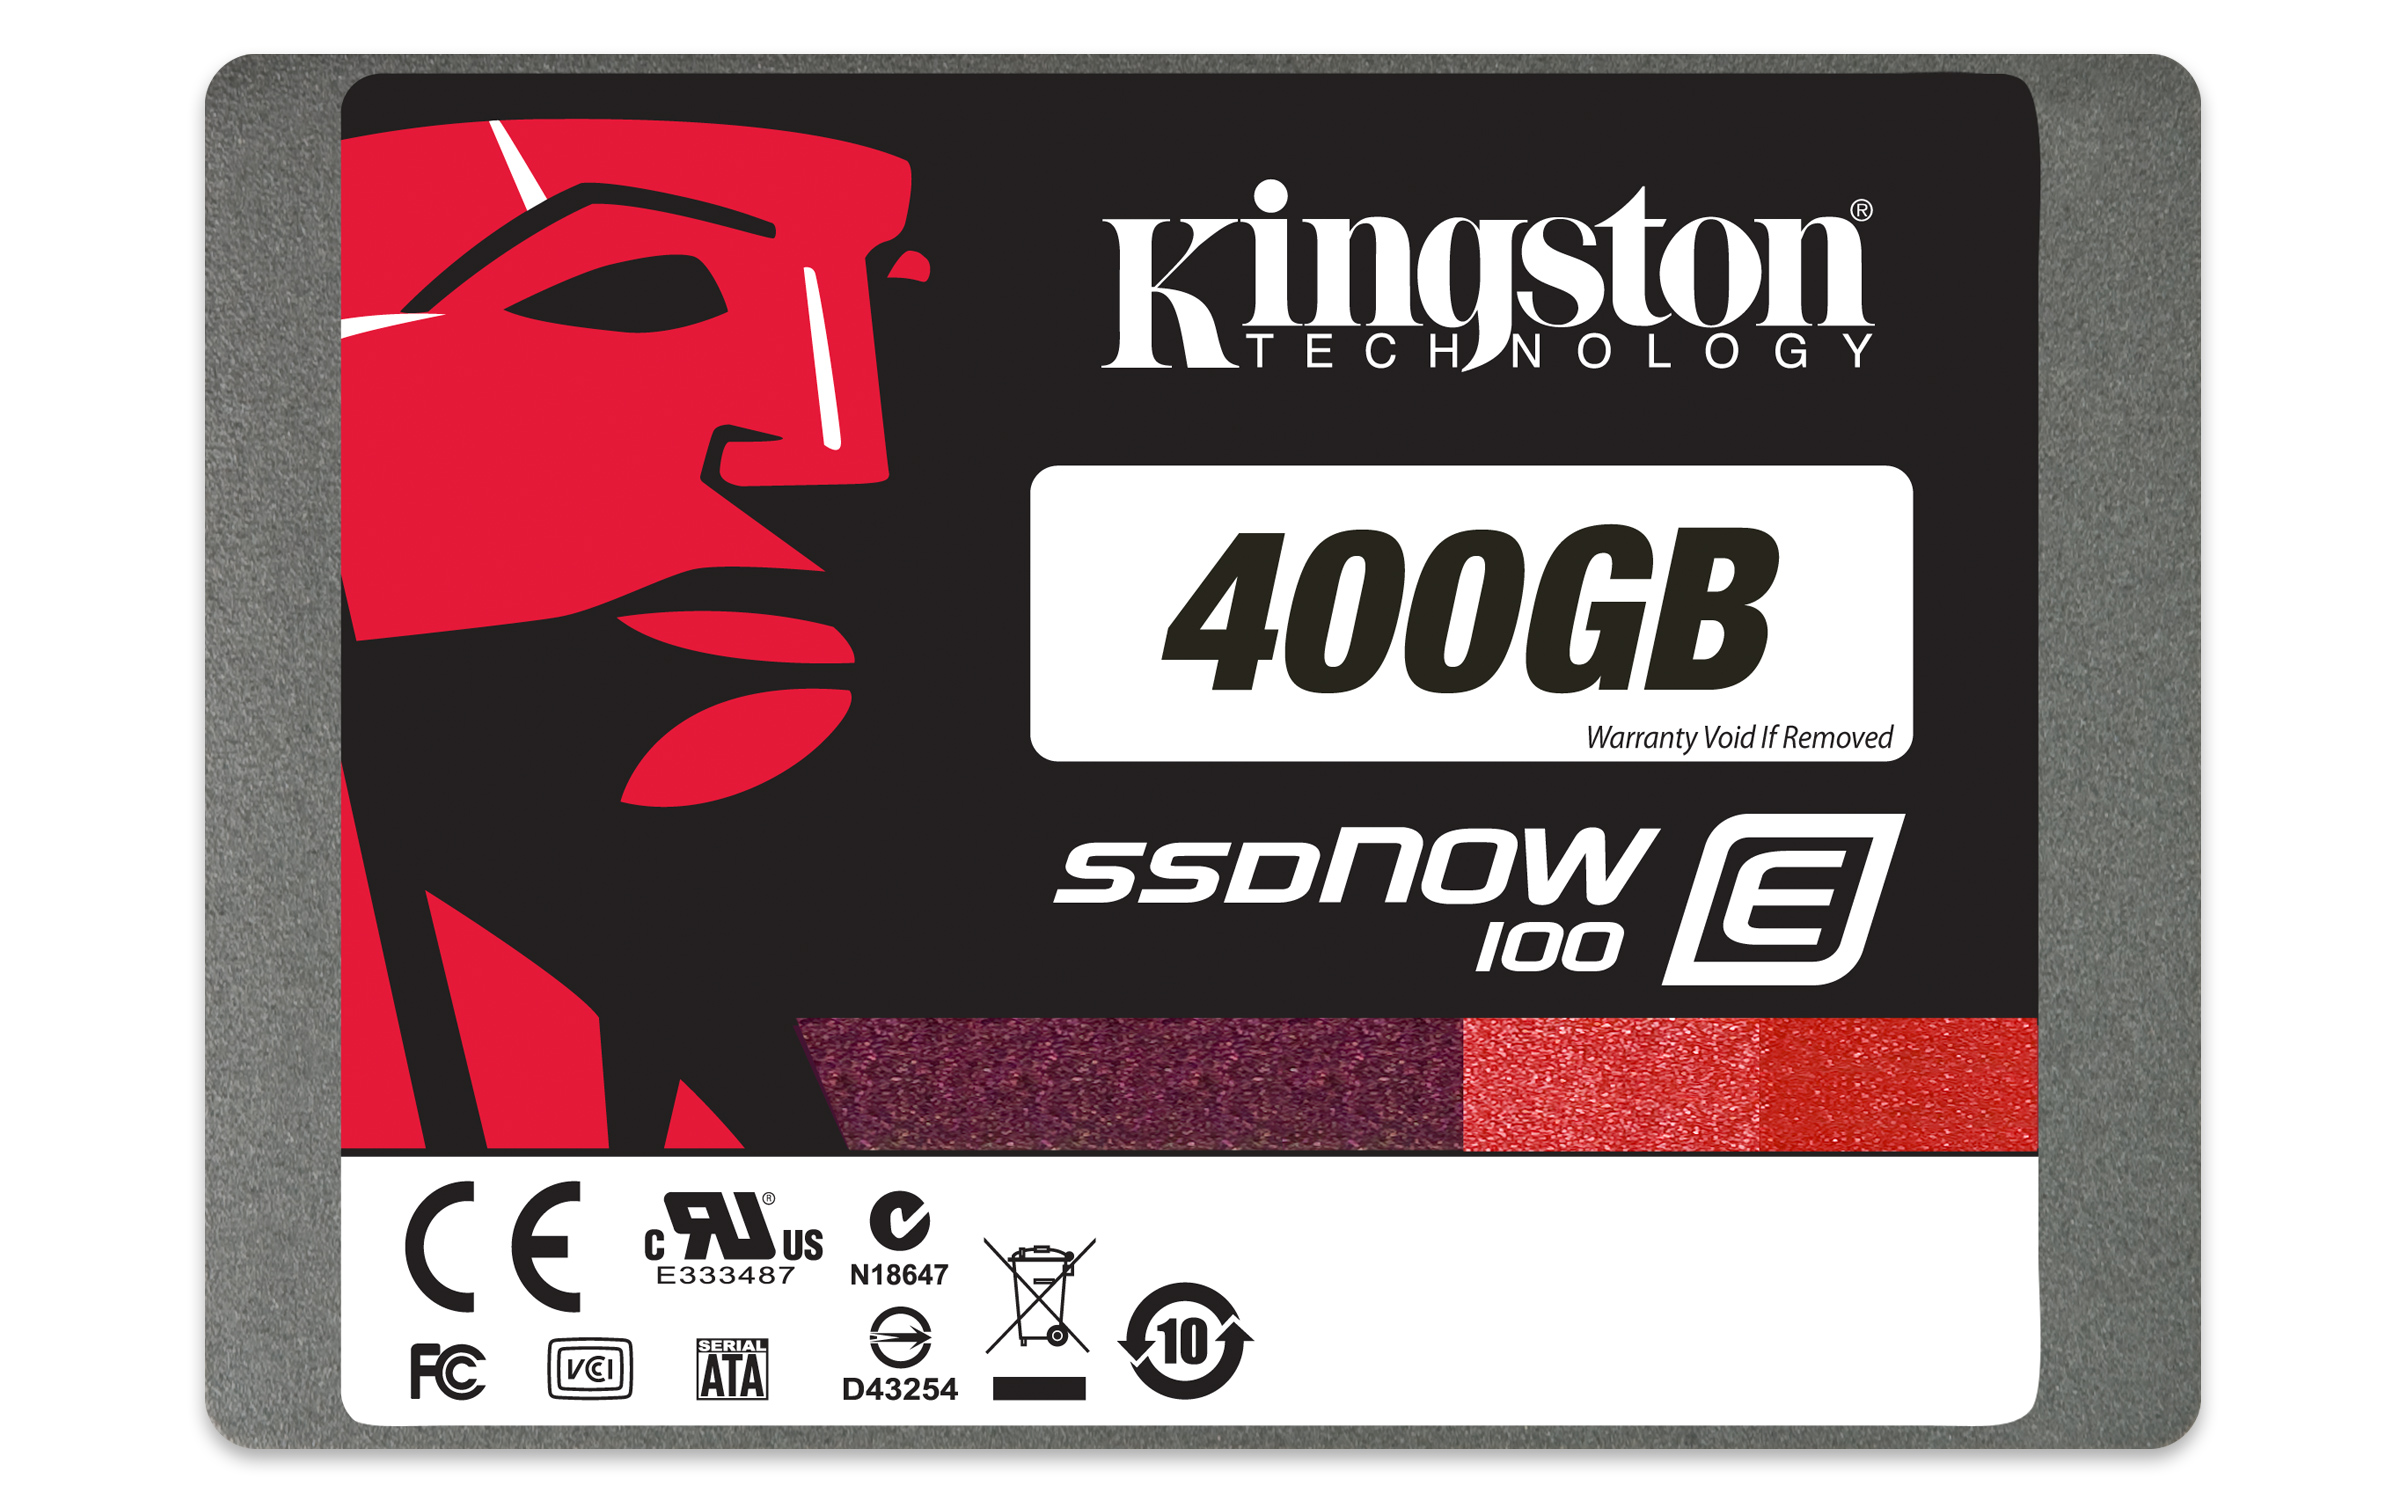 Media asset in full size related to 3dfxzone.it news item entitled as follows: Kingston annuncia gli SSD E100 per applicazioni mission-critical | Image Name: news17933_kingston-e100-ssd_4.jpg